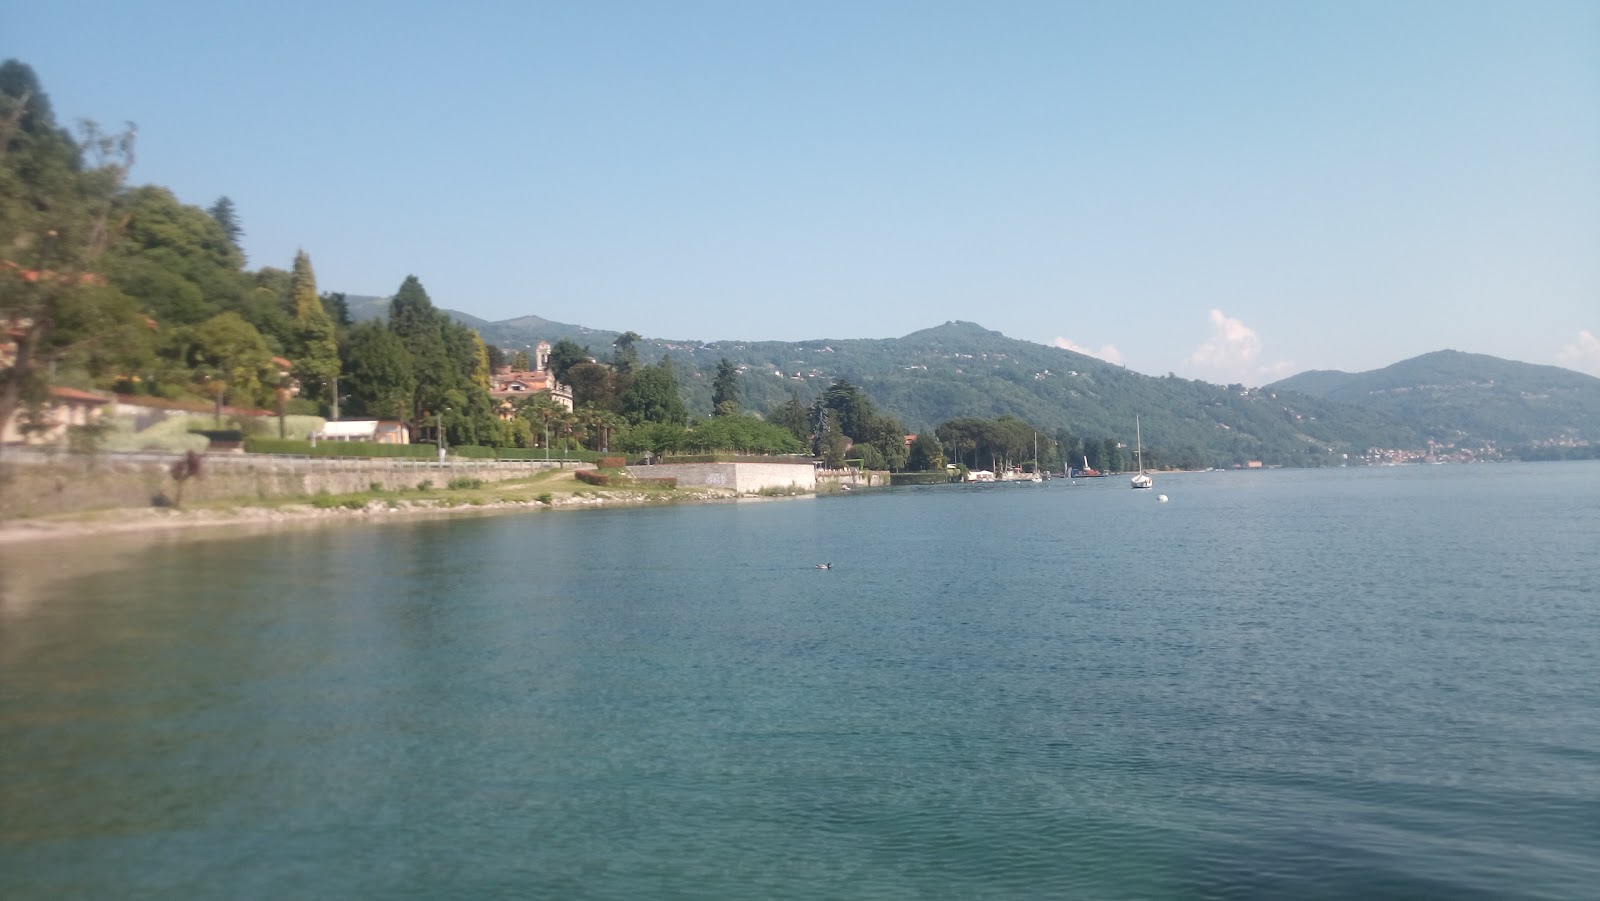 Foto af Spiaggia sul lago Maggiore med turkis rent vand overflade